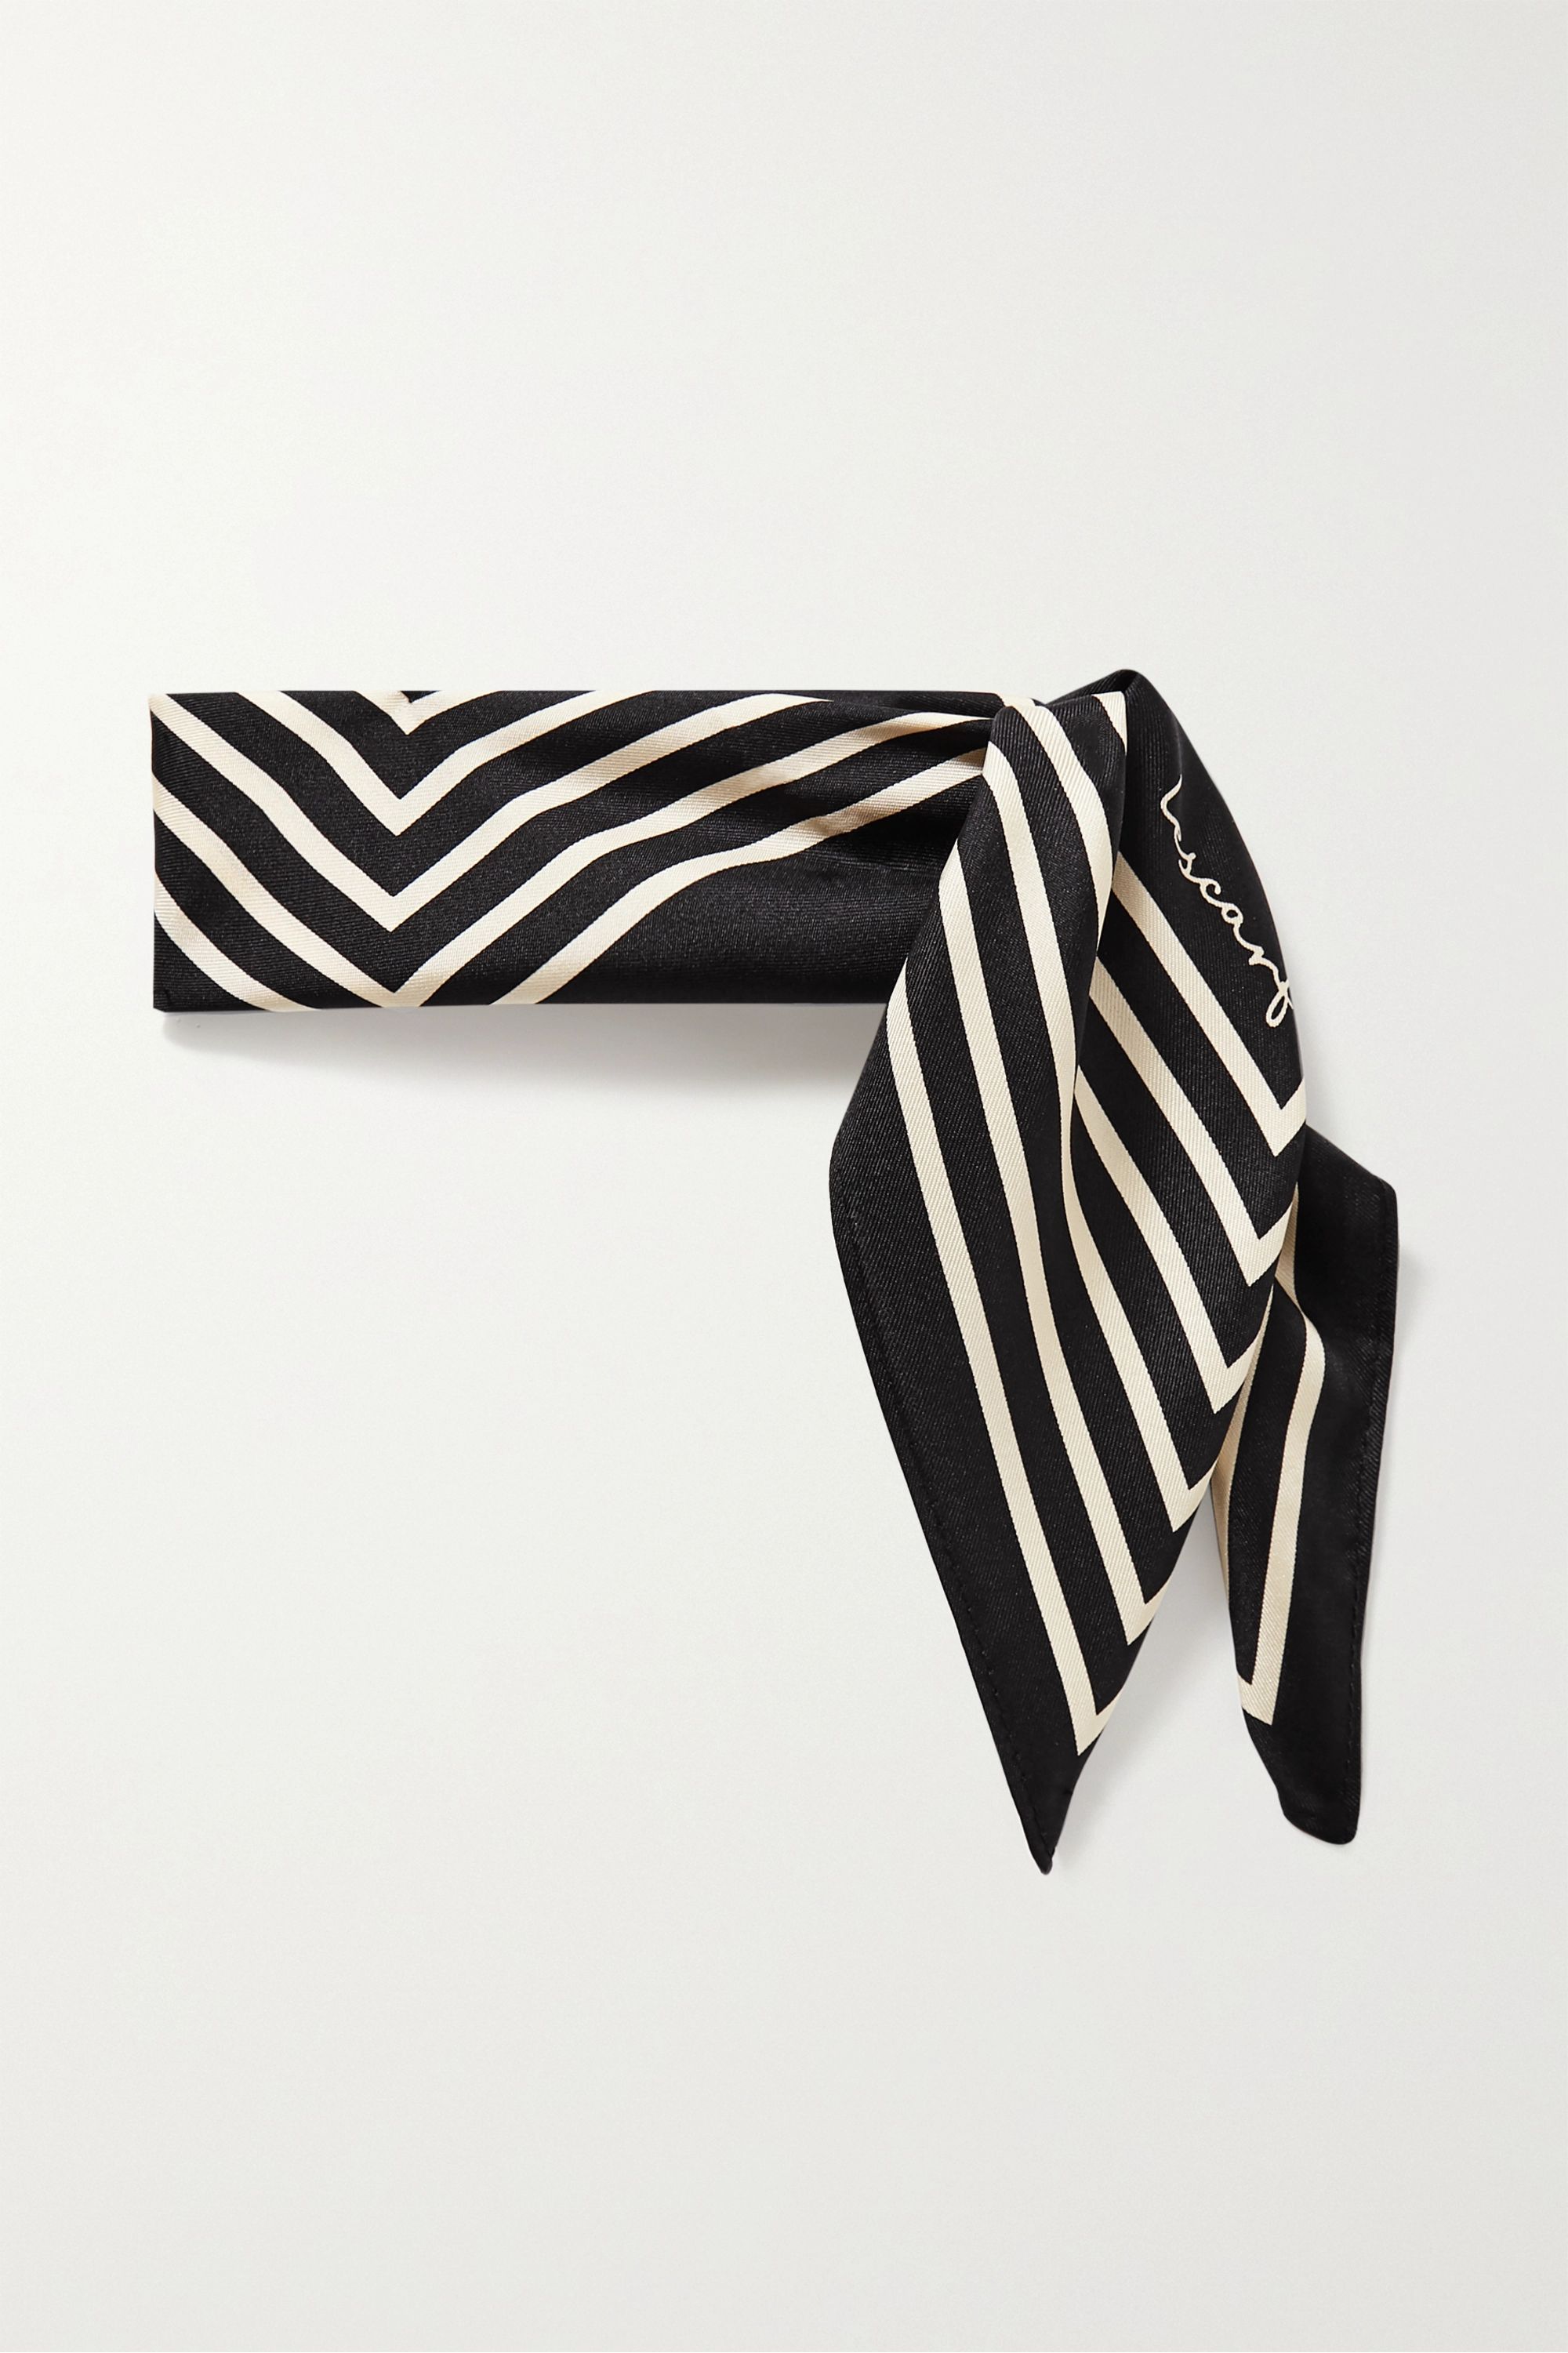 bandana folding styles for men